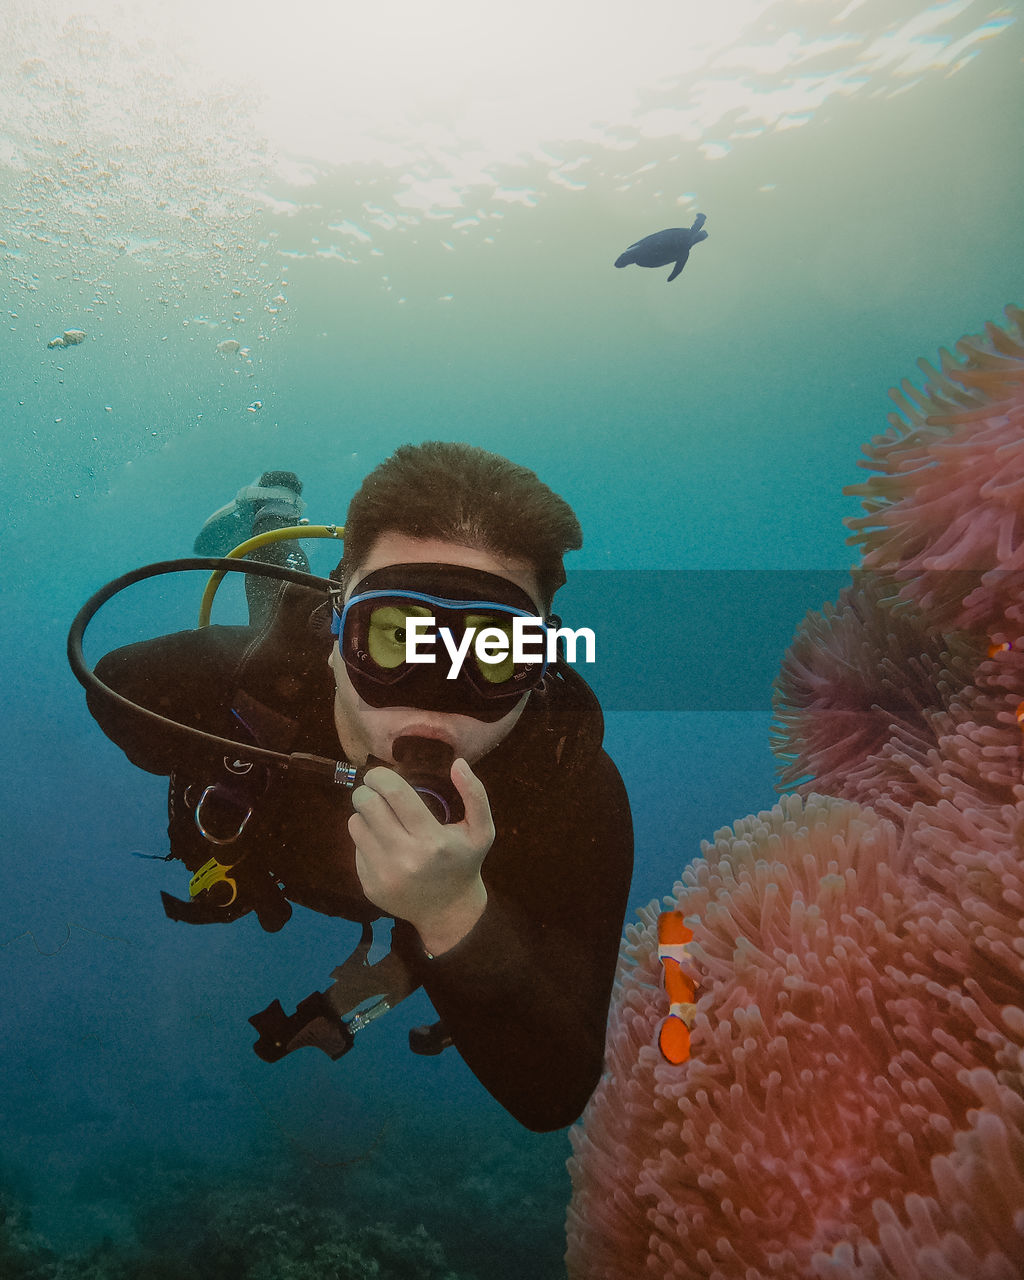 Underwater scuba diving man swimming near clown fish and anemone.